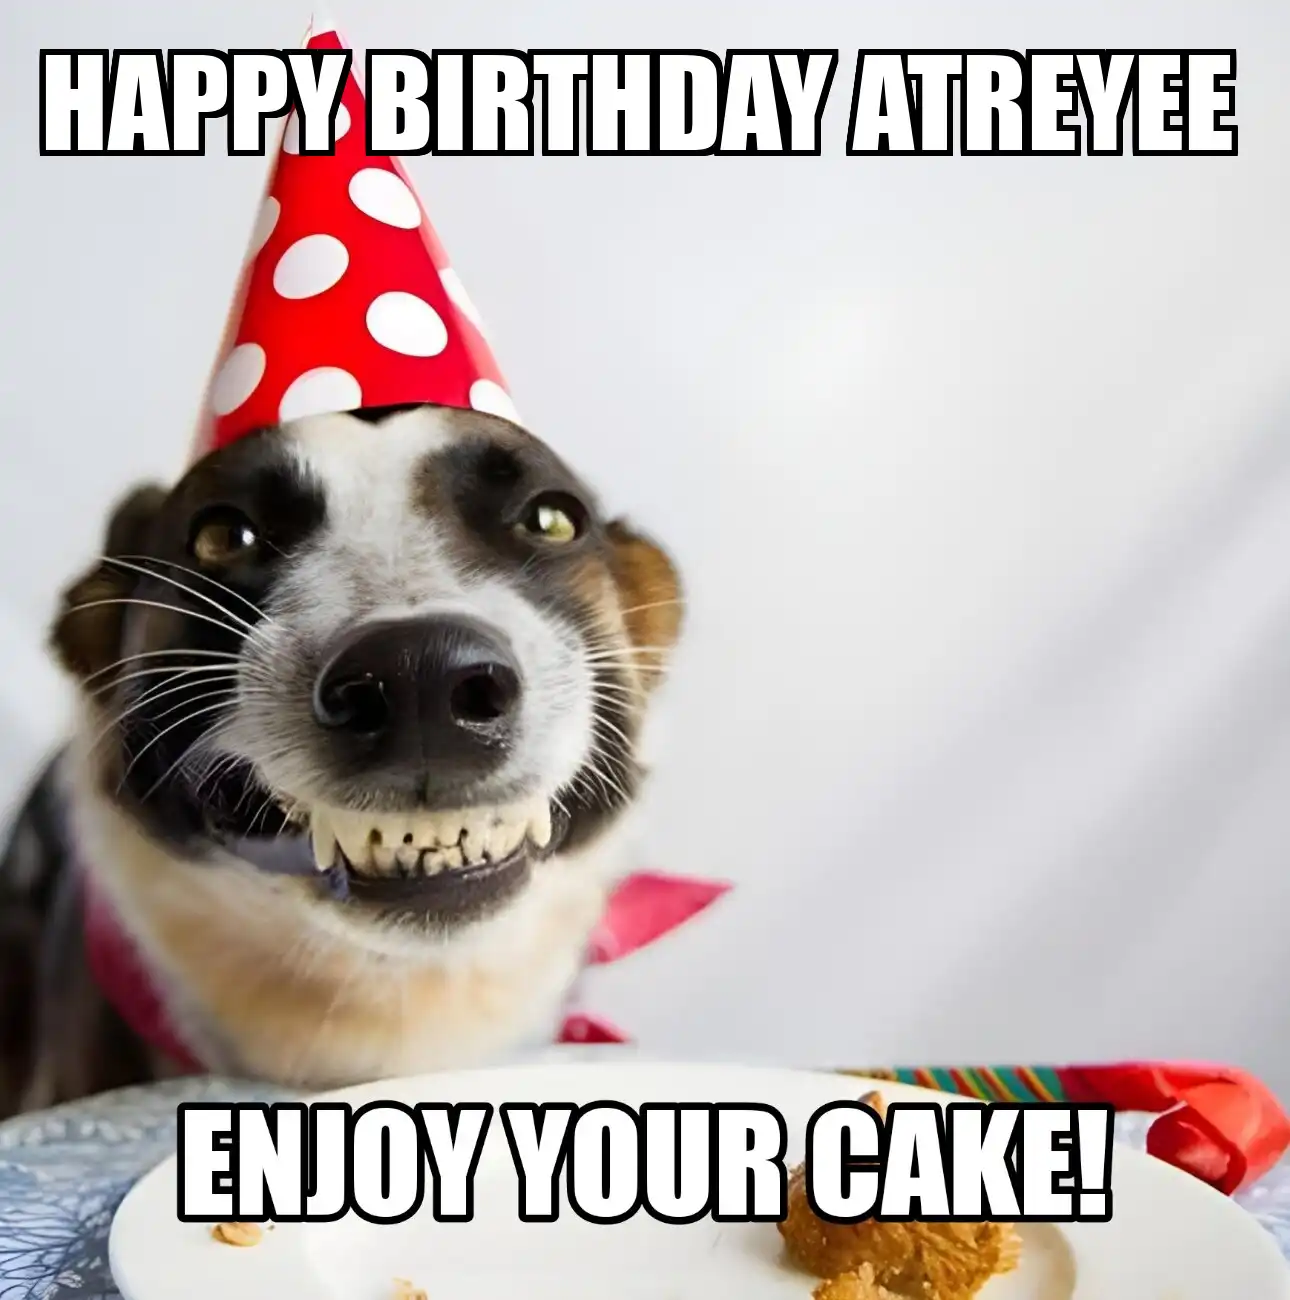 Happy Birthday Atreyee Enjoy Your Cake Dog Meme